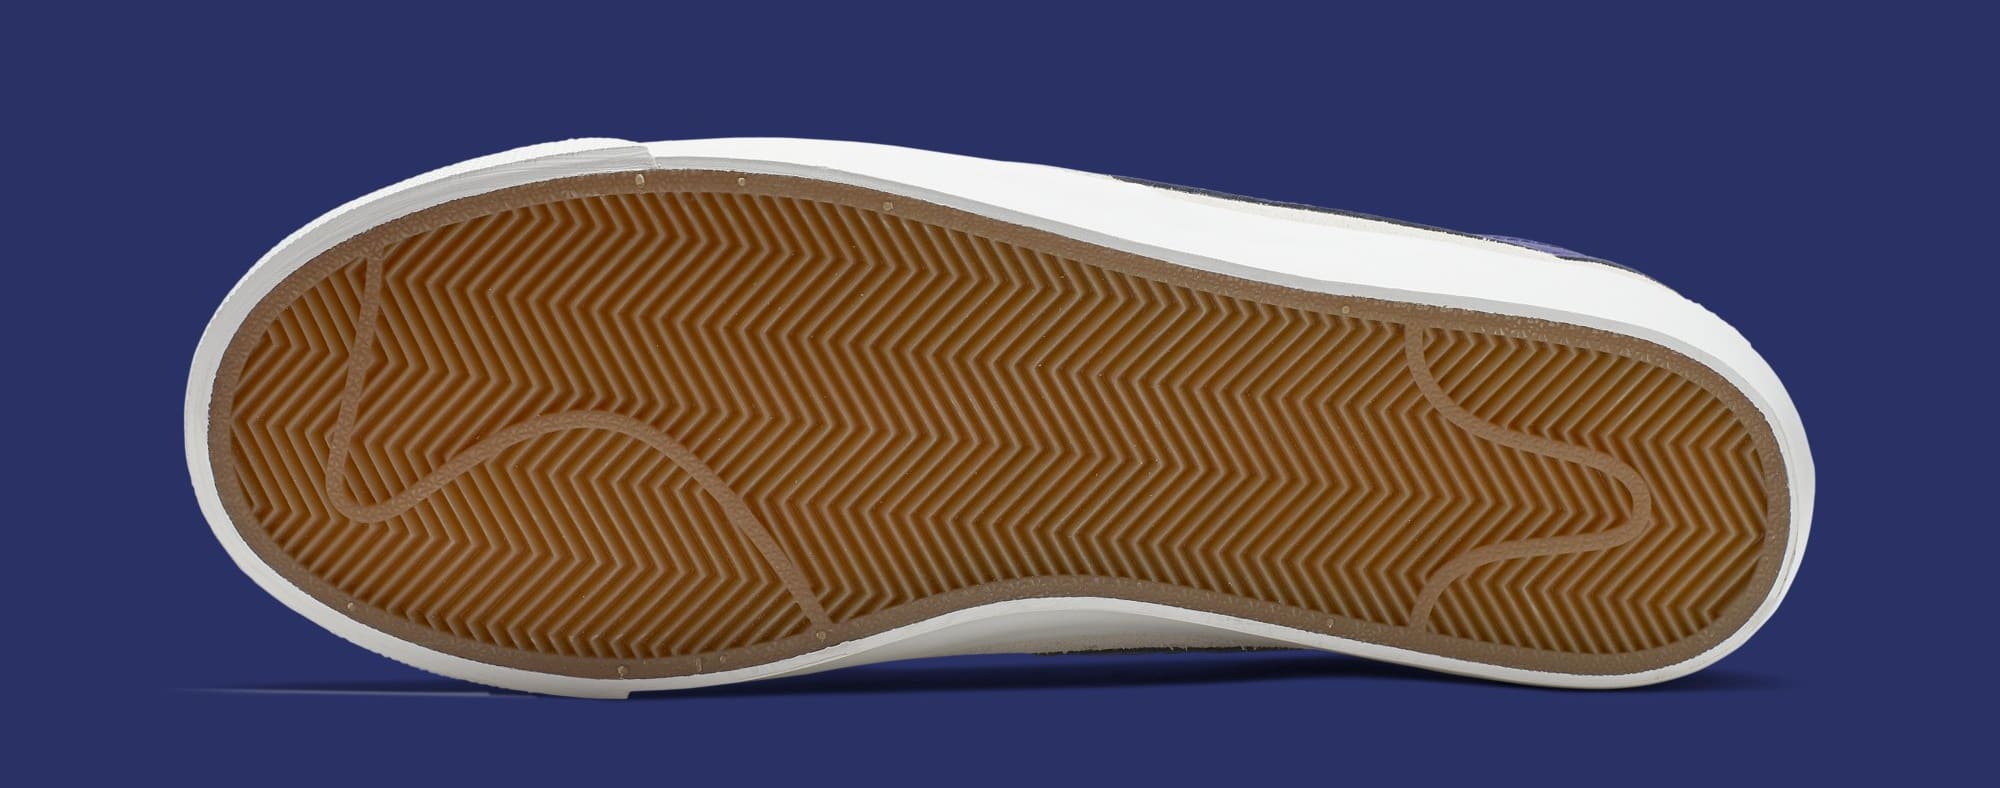 Polar Skate Co. x Nike SB Blazer Low AV3028-100 (Bottom)